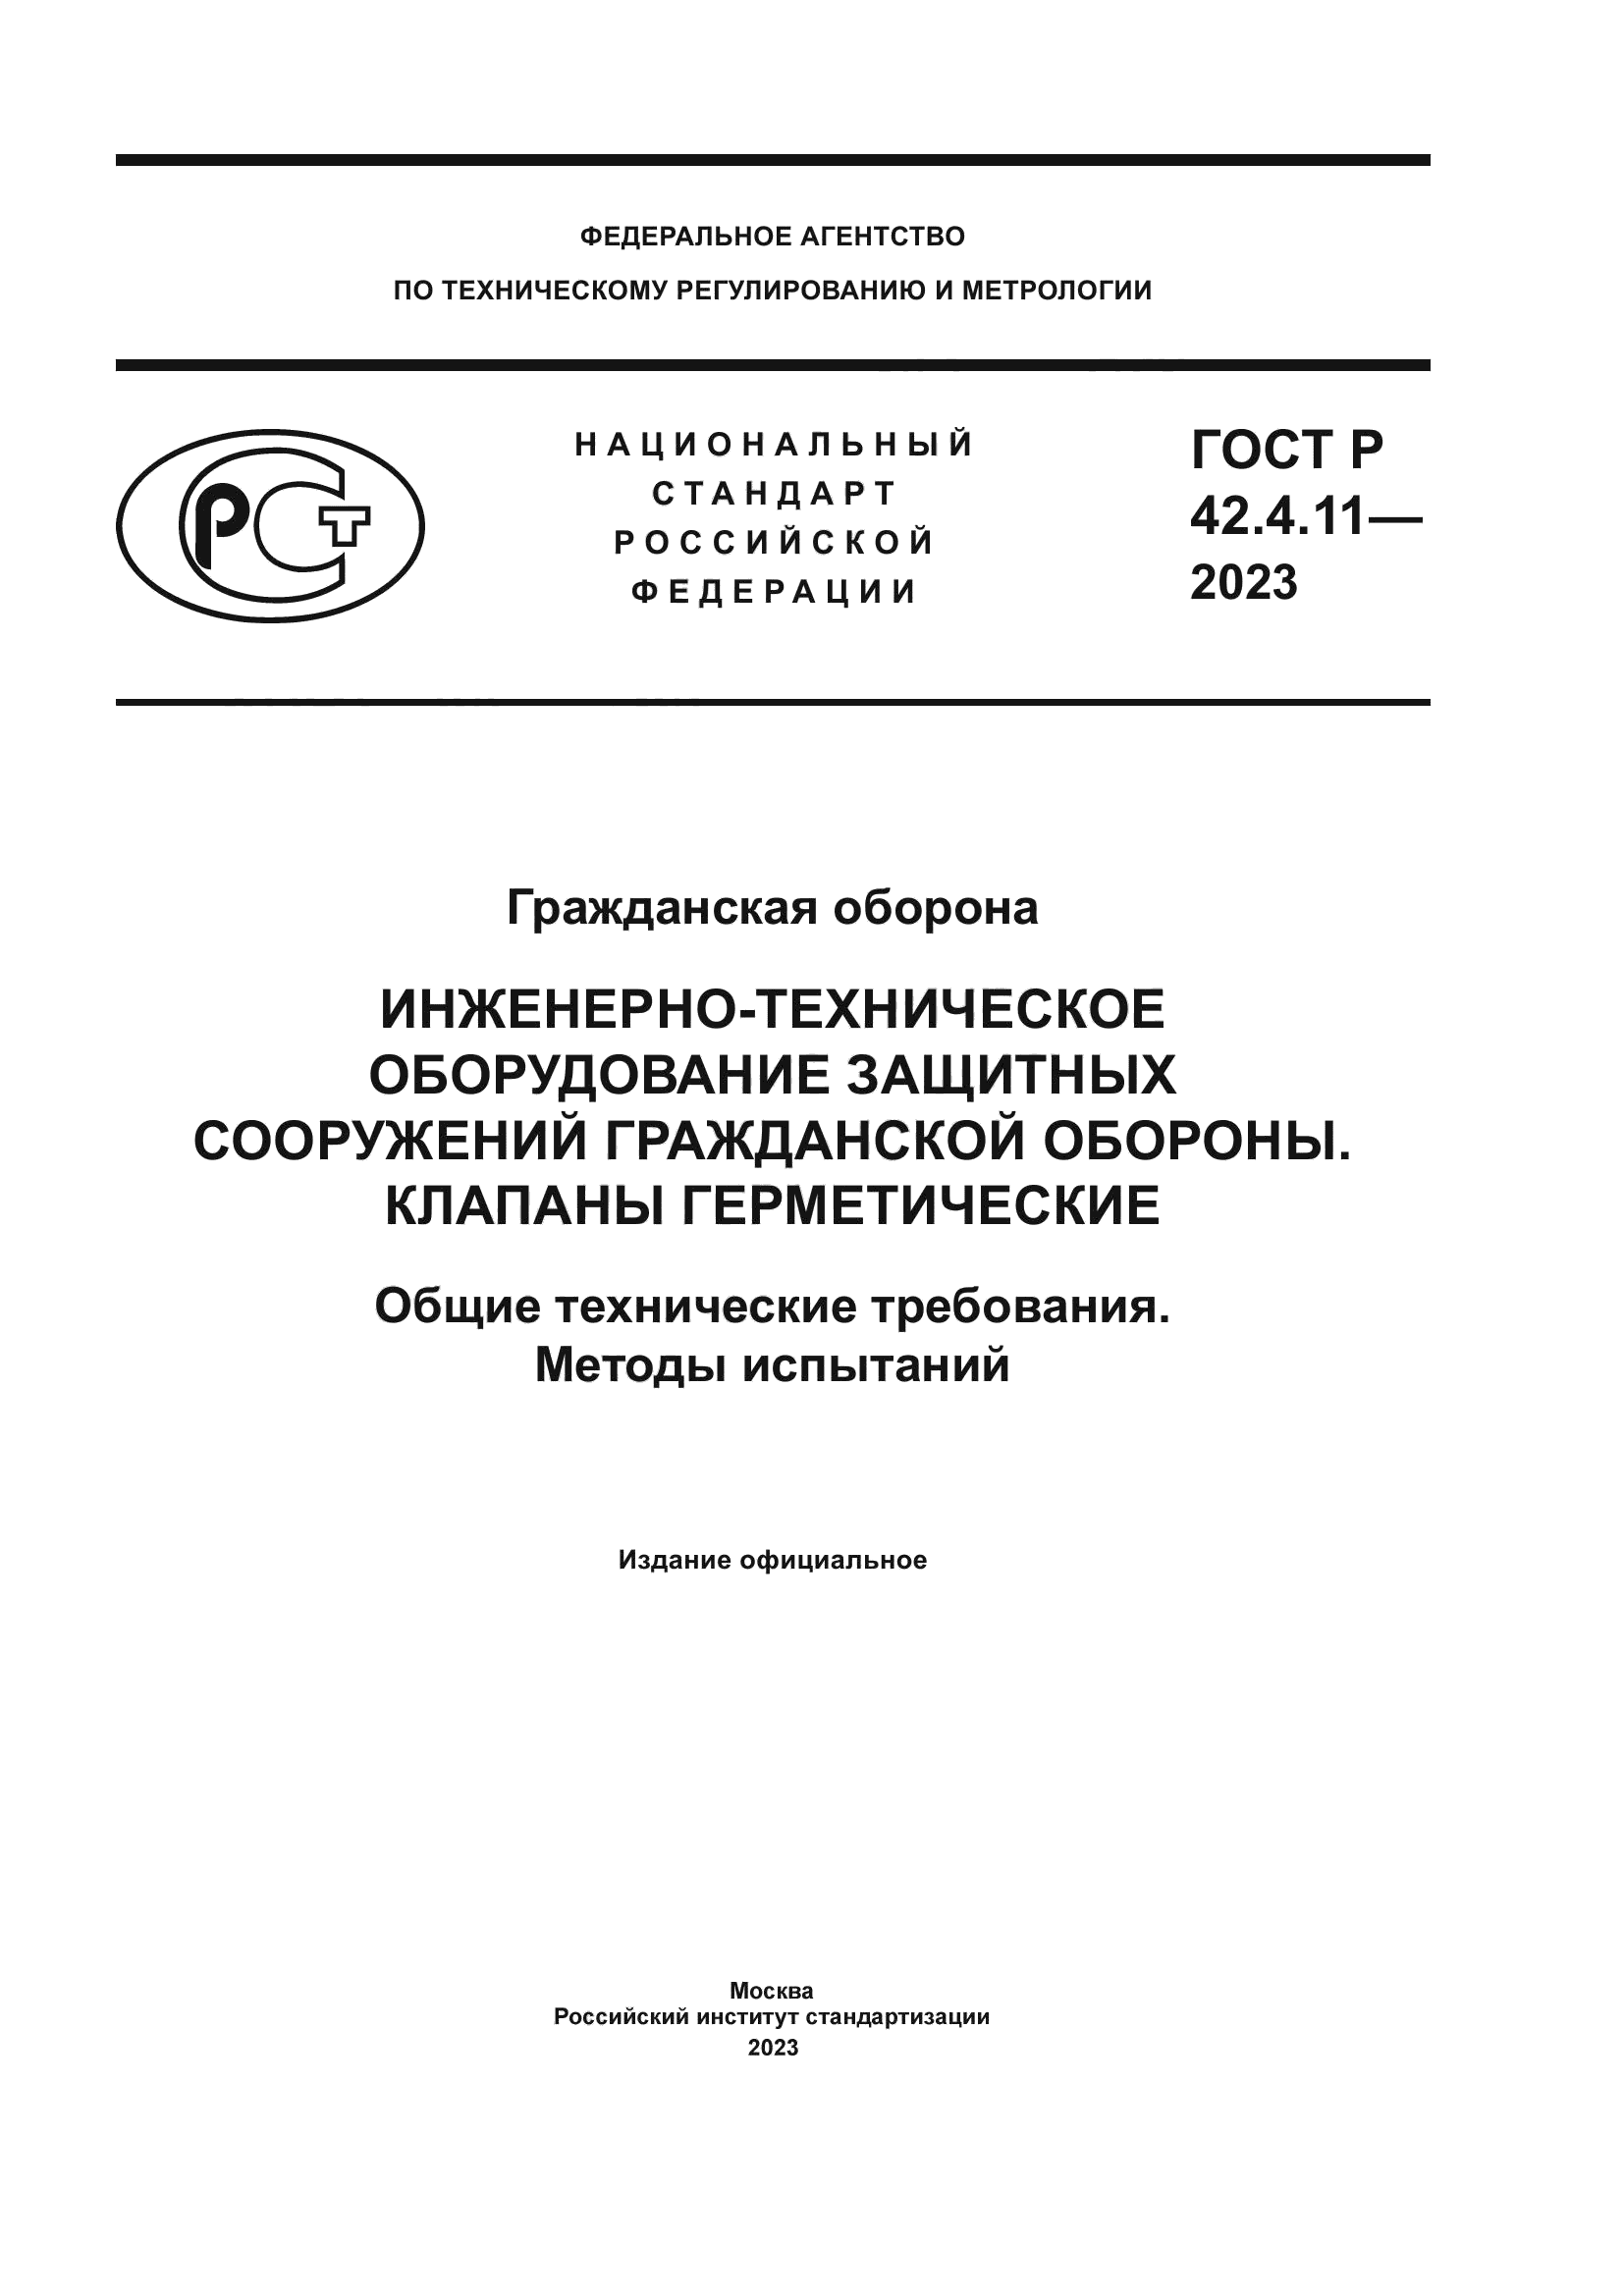 ГОСТ Р 42.4.11-2023